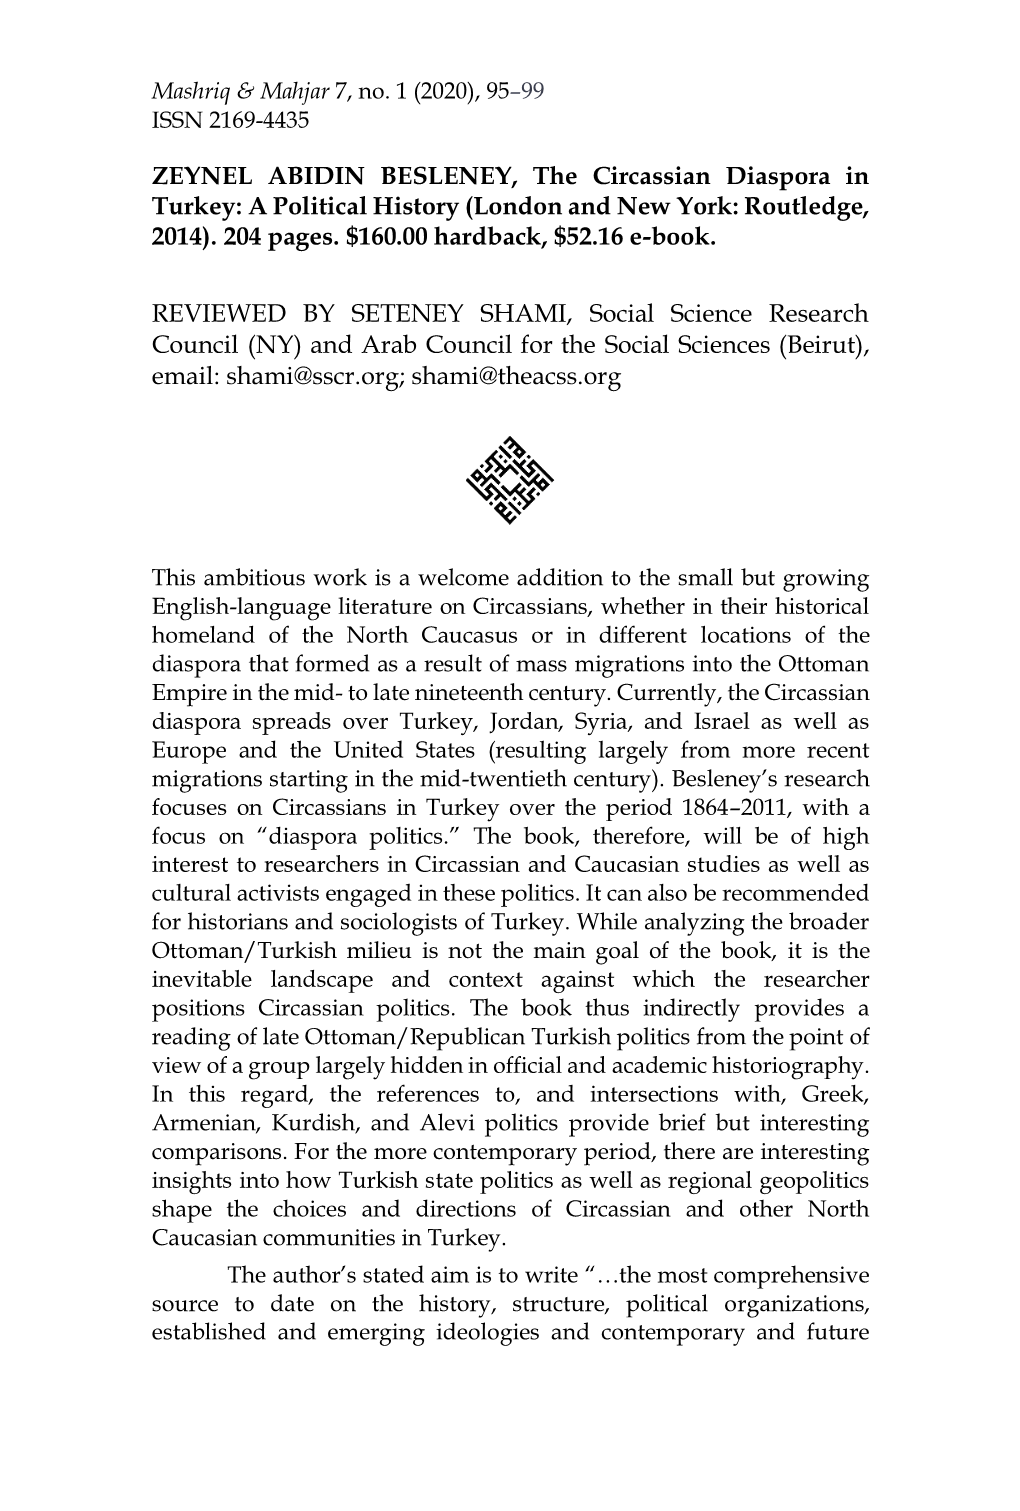 ZEYNEL ABIDIN BESLENEY, the Circassian Diaspora in Turkey: a Political History (London and New York: Routledge, 2014)